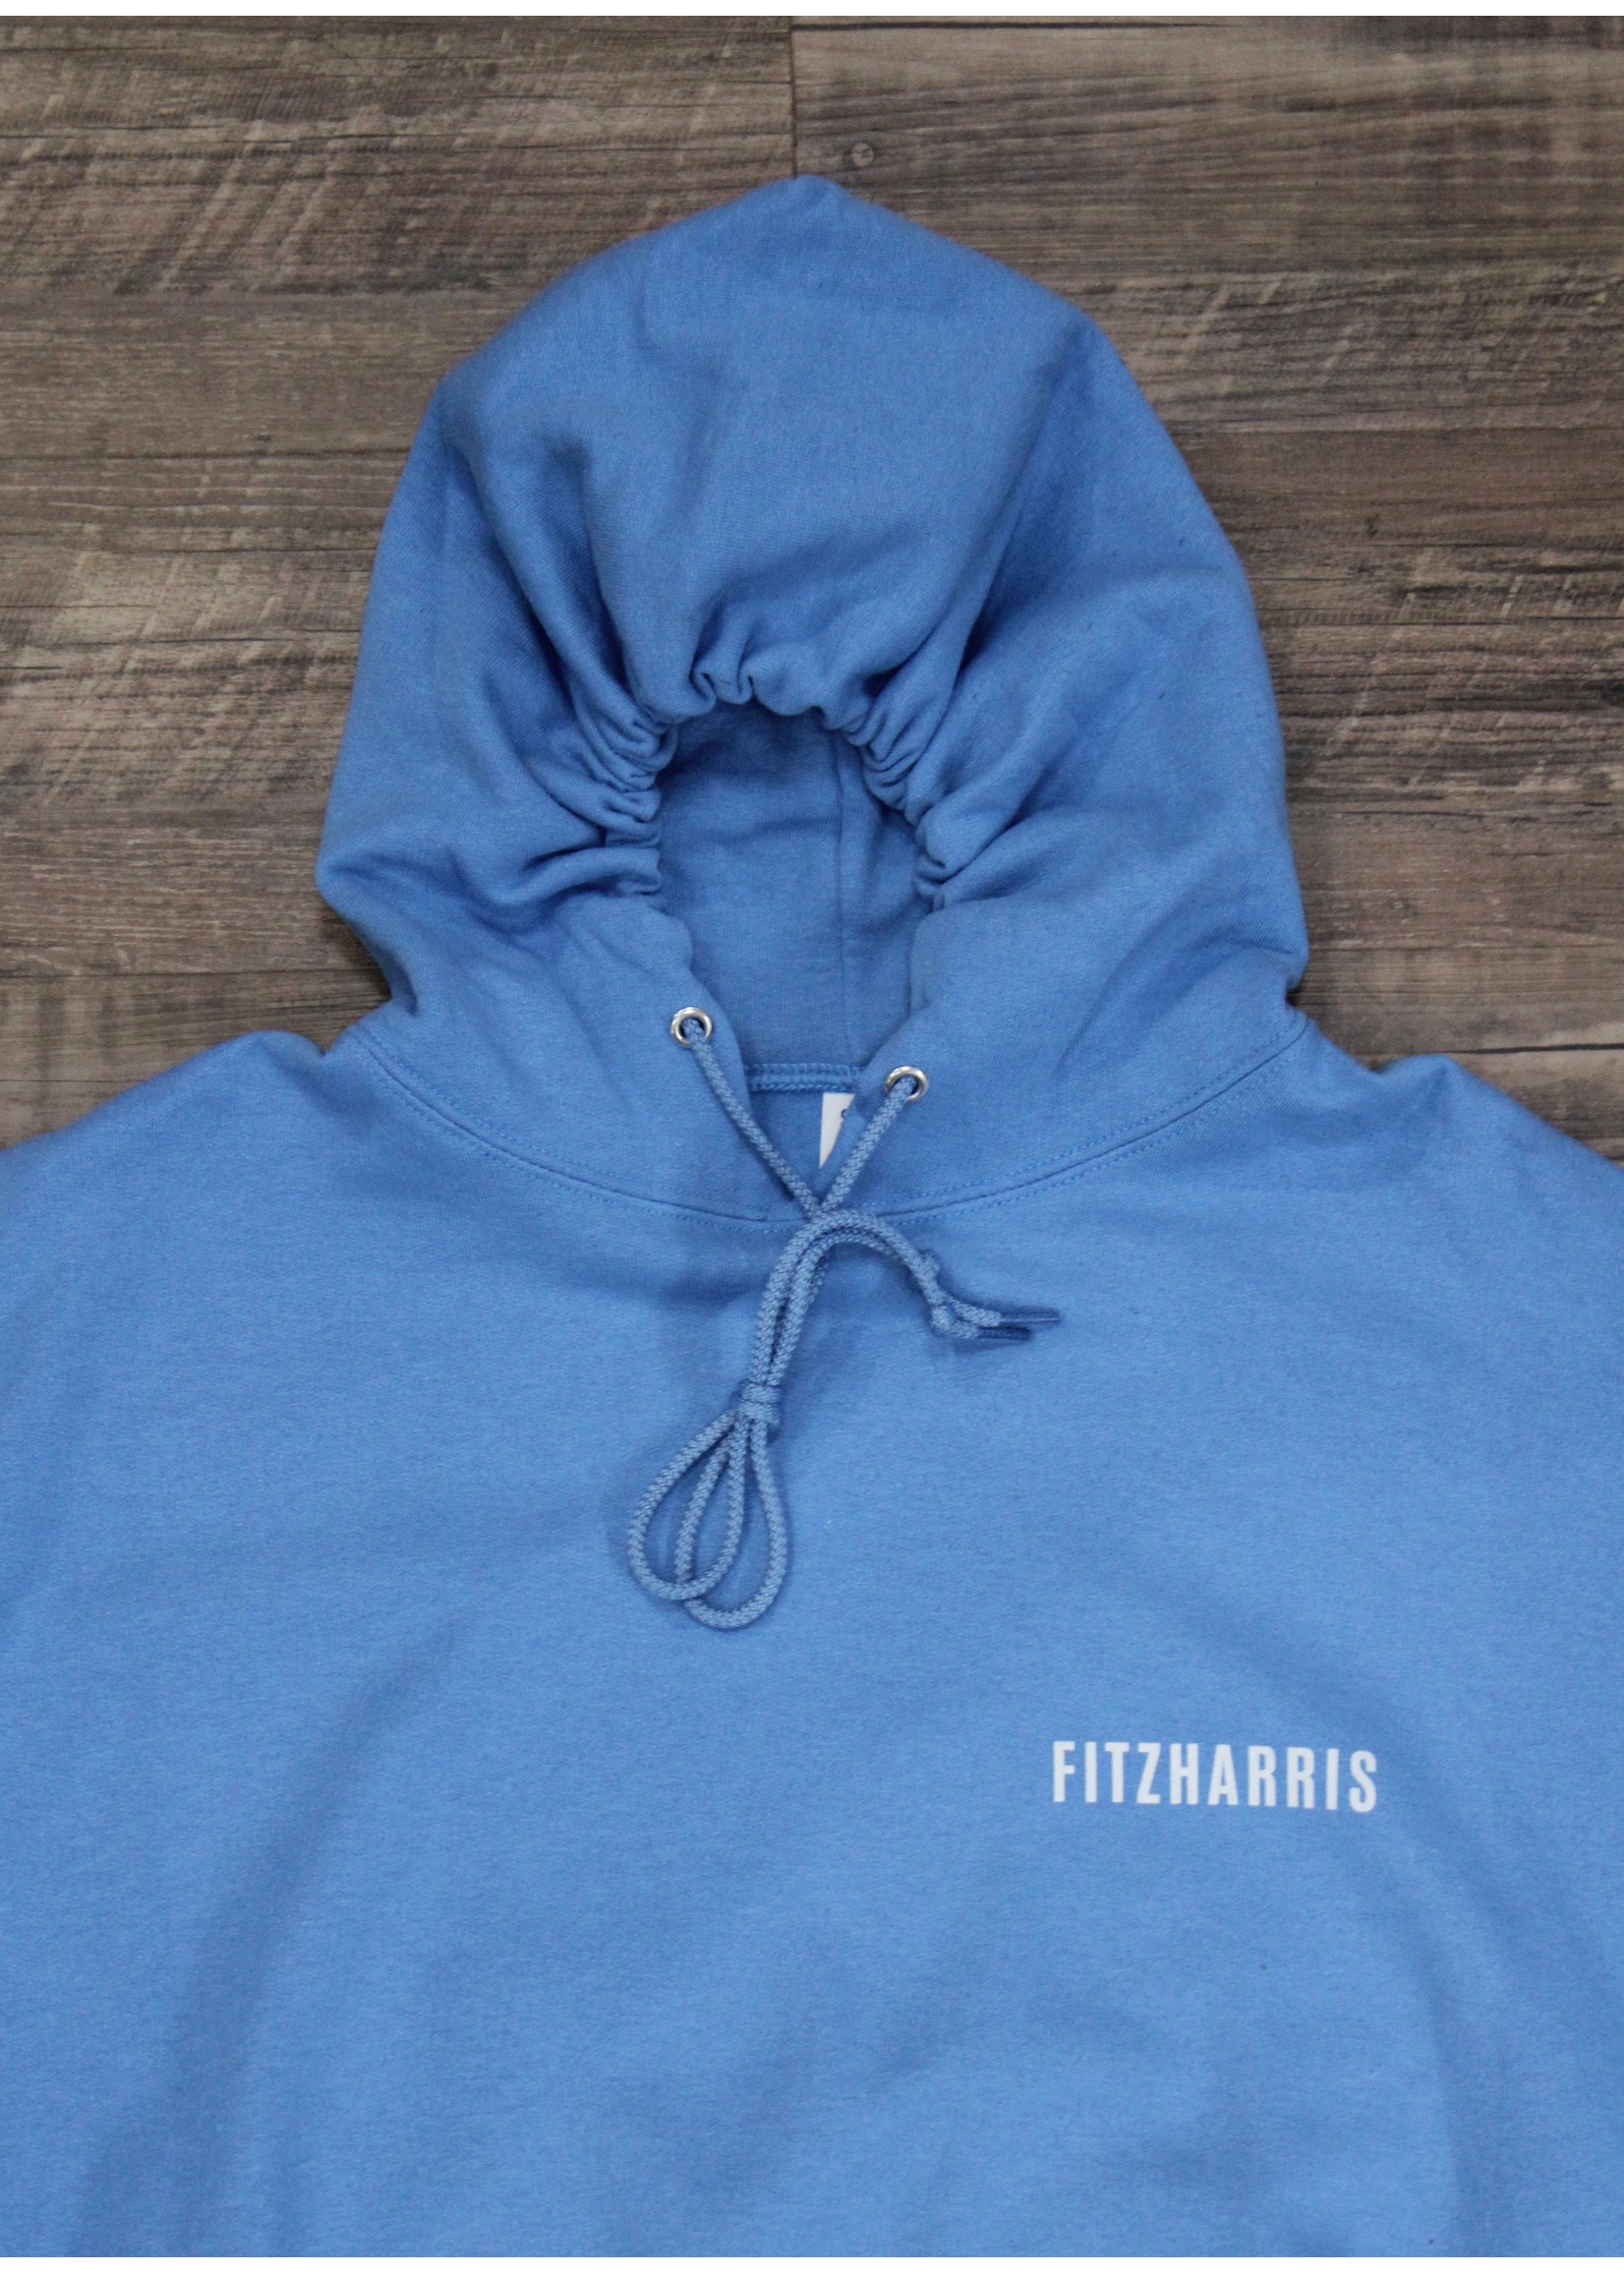 Fitzharris Fitz Wheel Hooded Sweatshirt